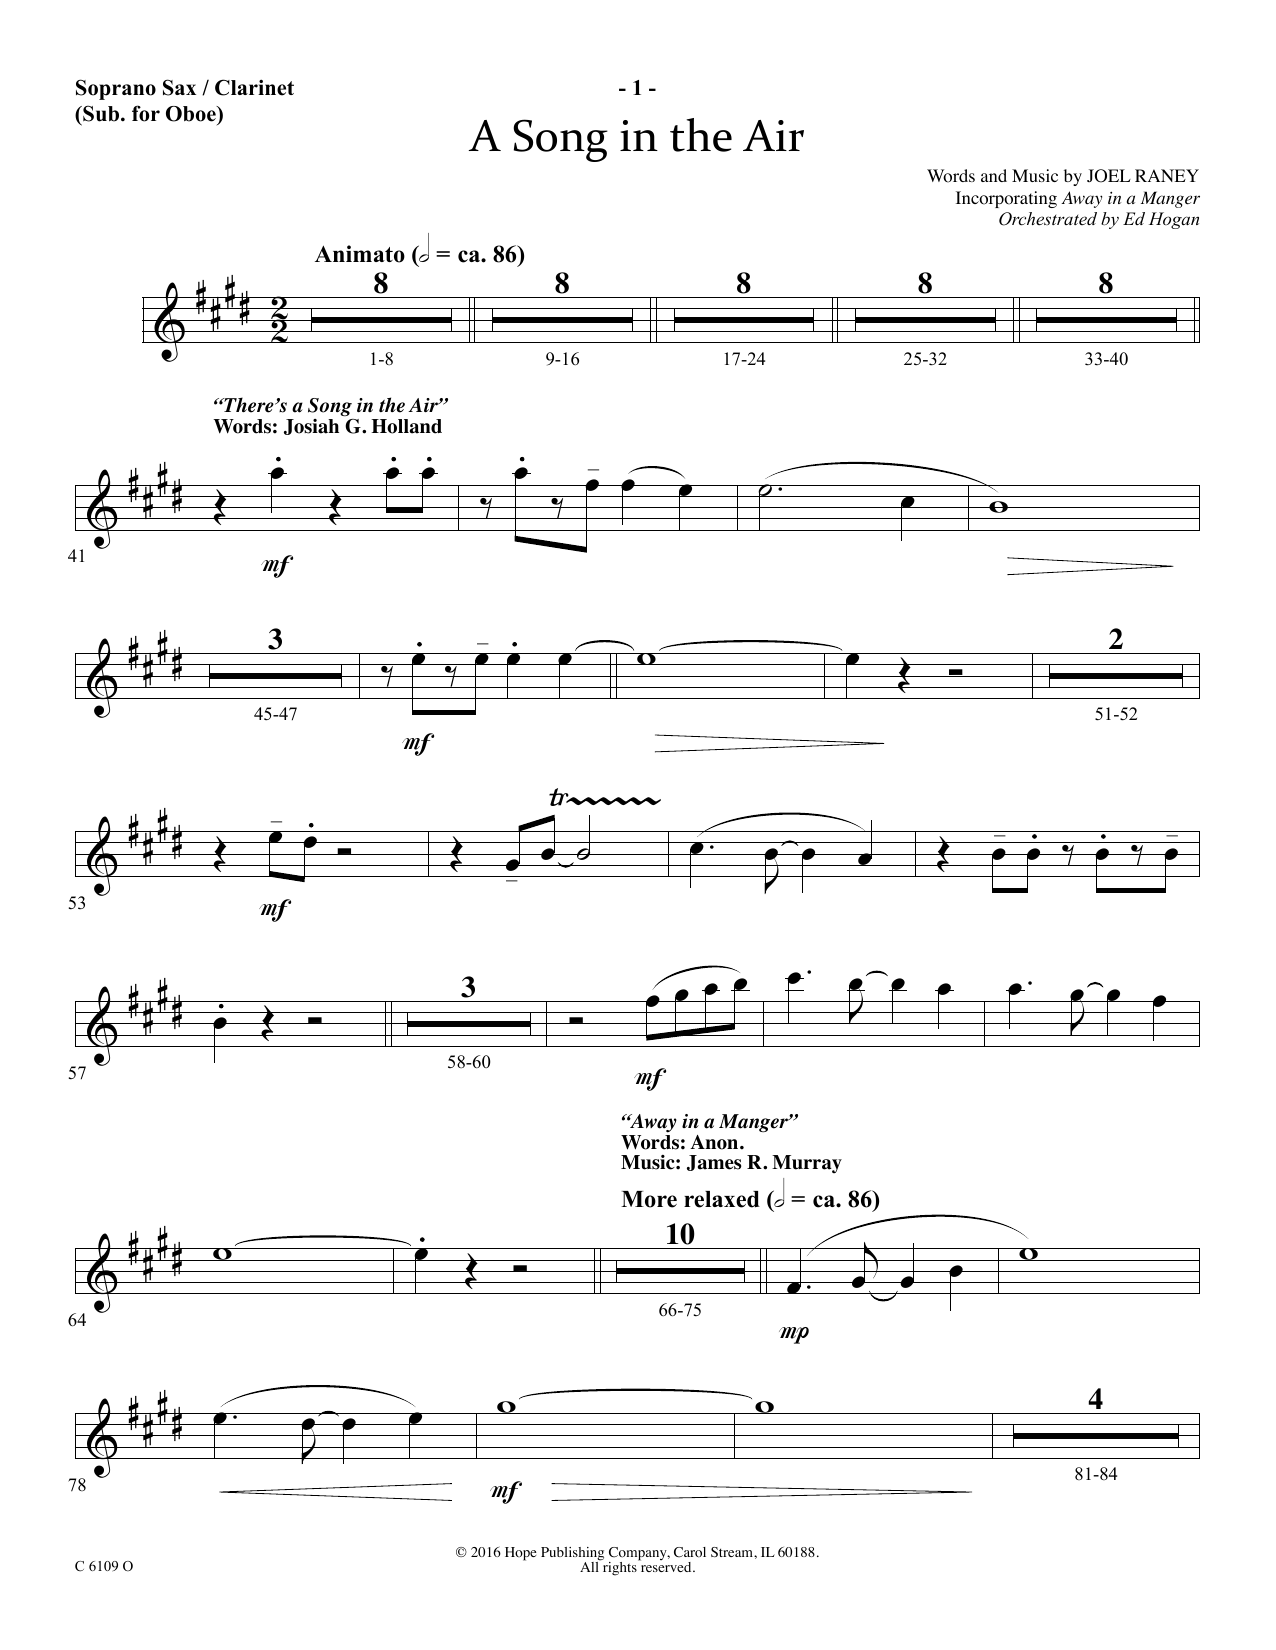 Ed Hogan A Song In The Air - Soprano Sax/Clarinet(sub oboe) Sheet Music Notes & Chords for Choir Instrumental Pak - Download or Print PDF